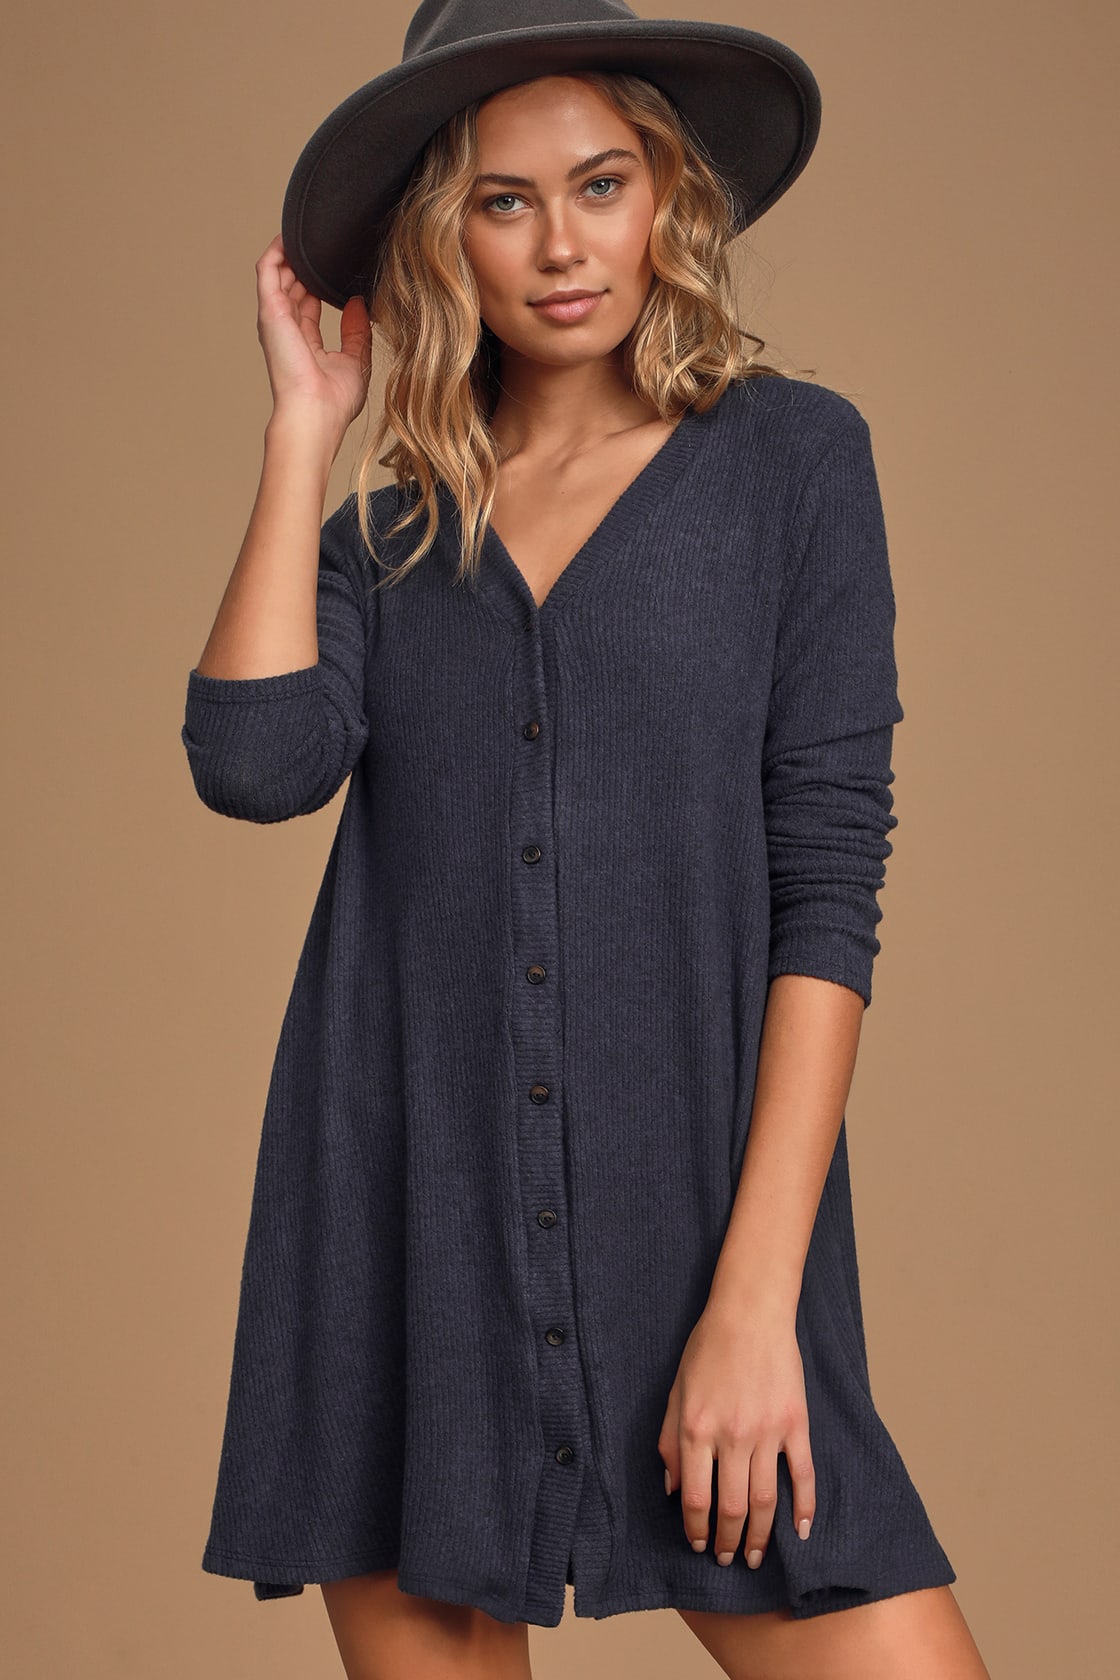 Lulus Winter Sweet Comfort Button Up Sweater Dress Size S